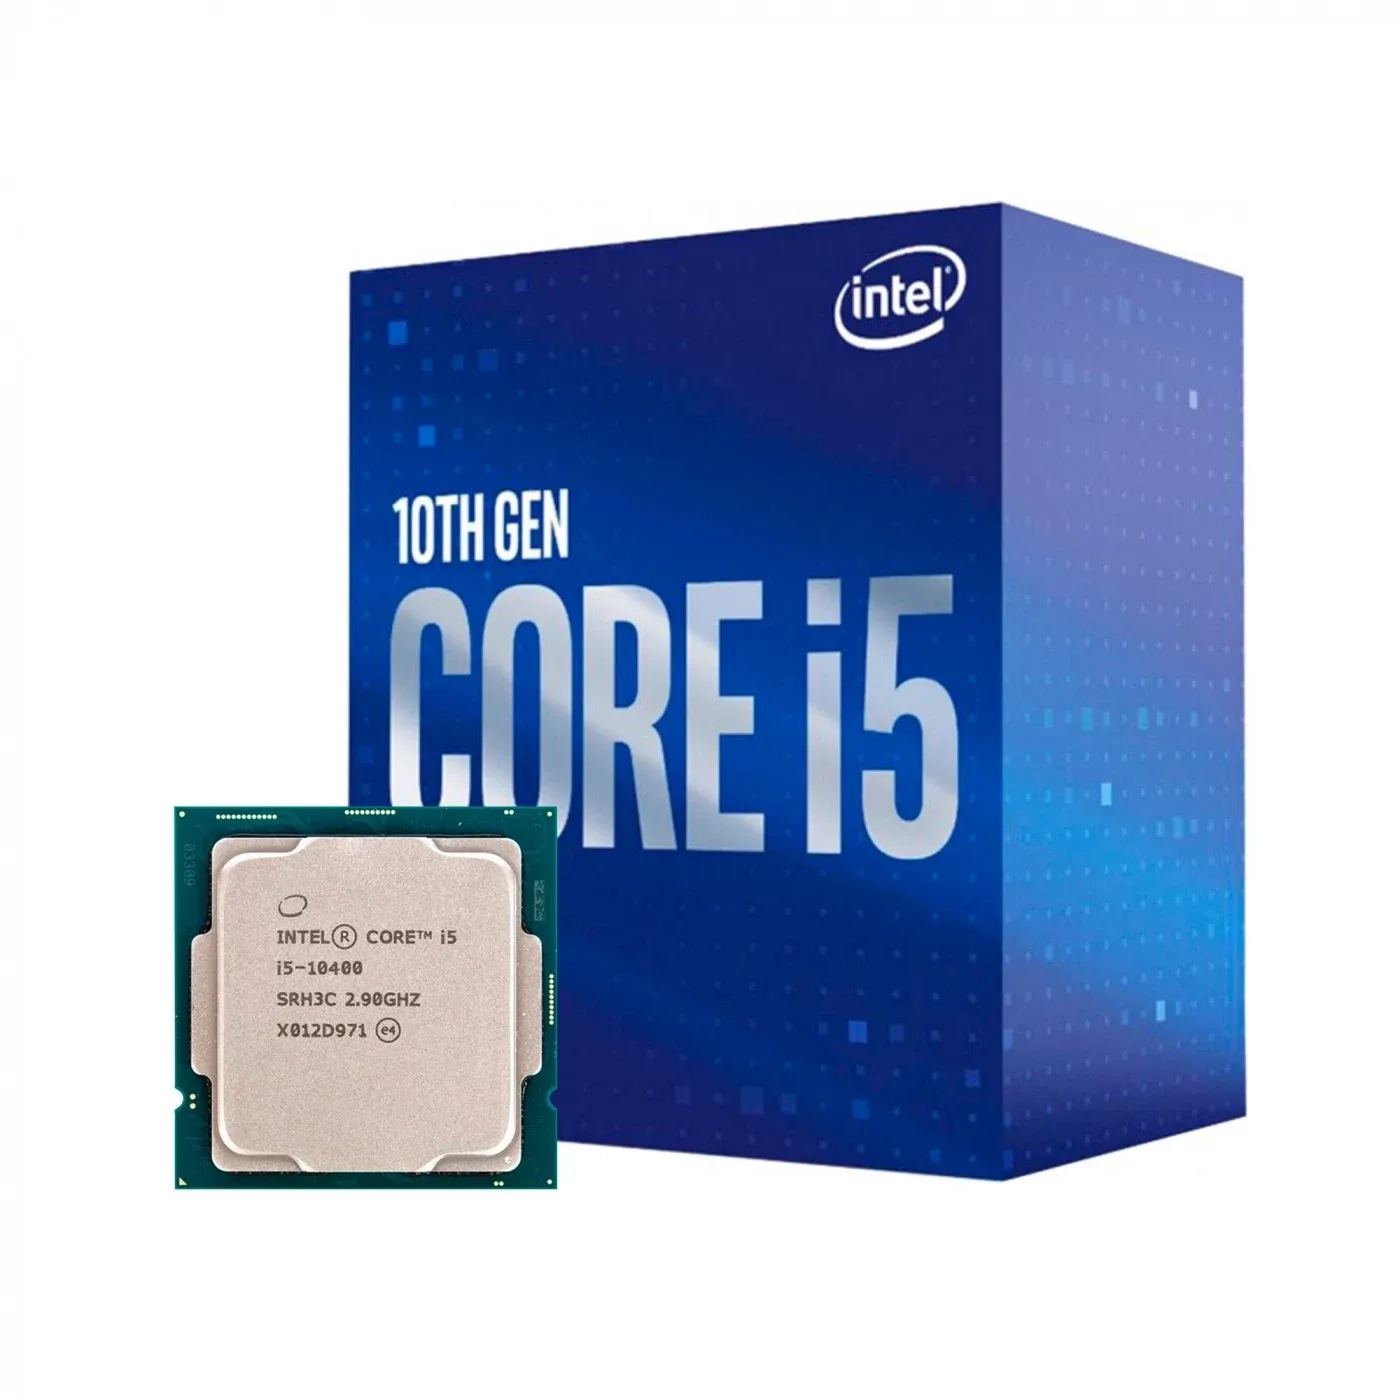 Купити Процесор INTEL Core i5-10400 (2.9GHz, 12MB, LGA1200) BOX (BX8070110400) (Trade-In SN U3T01F5101699) - фото 1